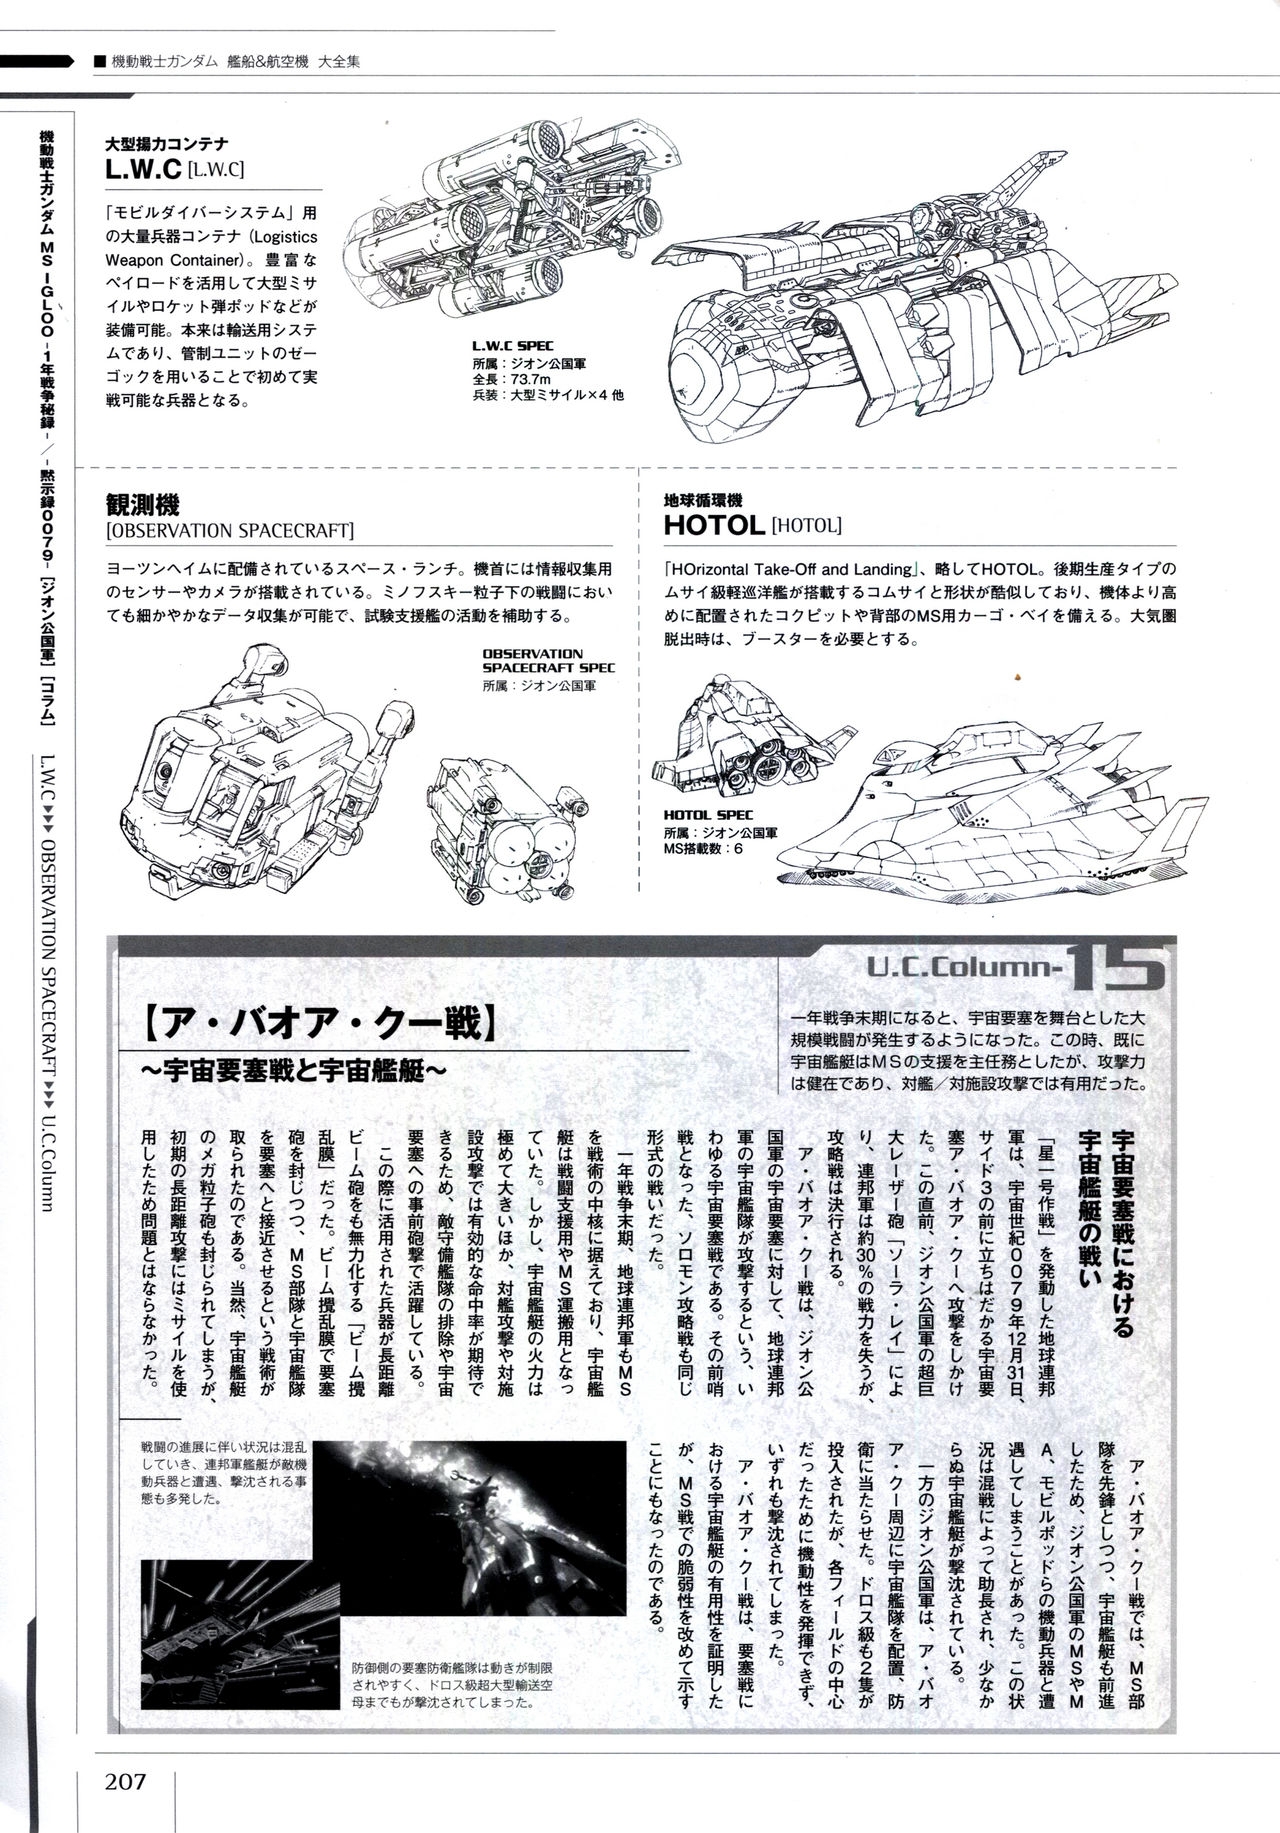 Mobile Suit Gundam - Ship & Aerospace Plane Encyclopedia - Revised Edition 212